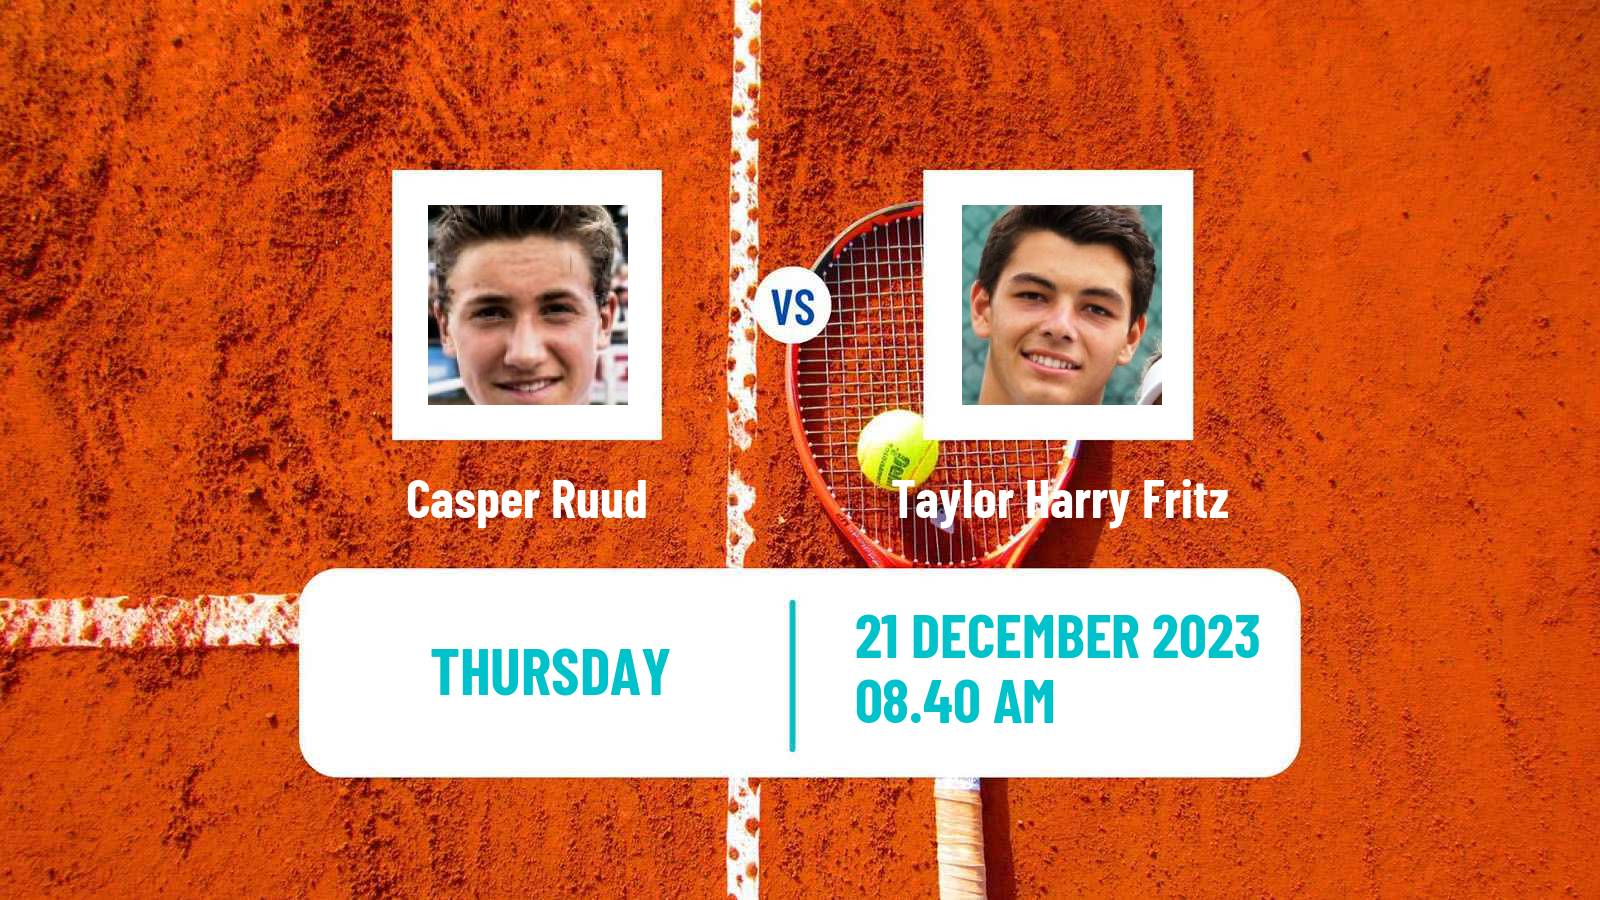 Tennis Exhibition World Tennis League Casper Ruud - Taylor Harry Fritz